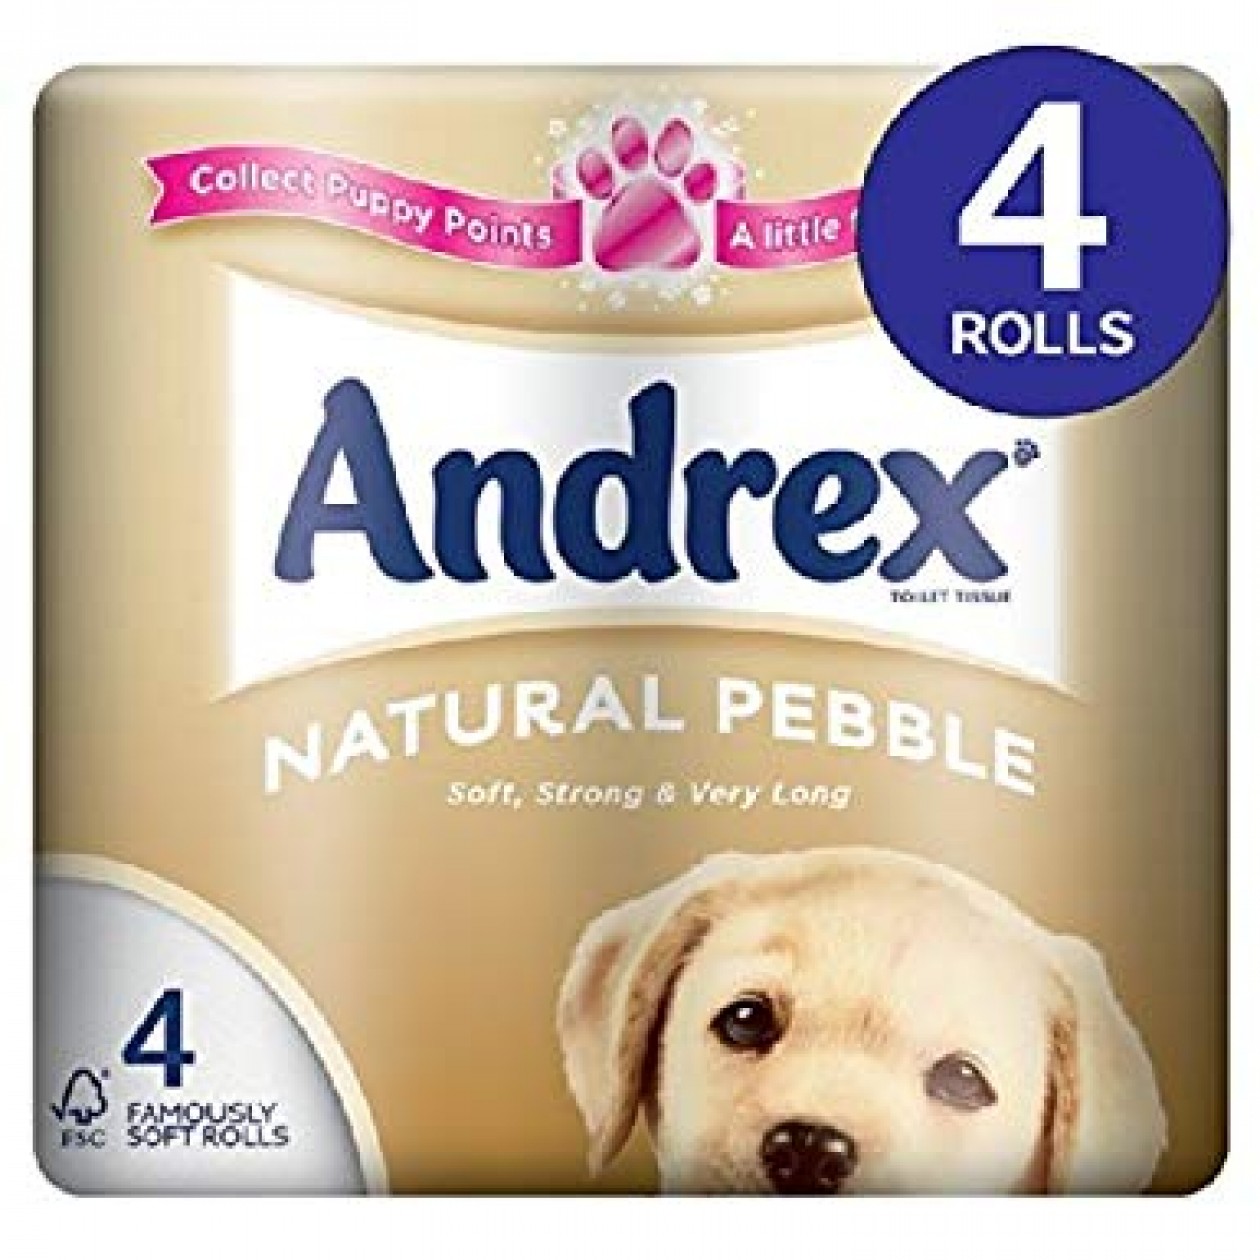 Andrex Natural Pebble Toilet Tissue X 4 Rolls